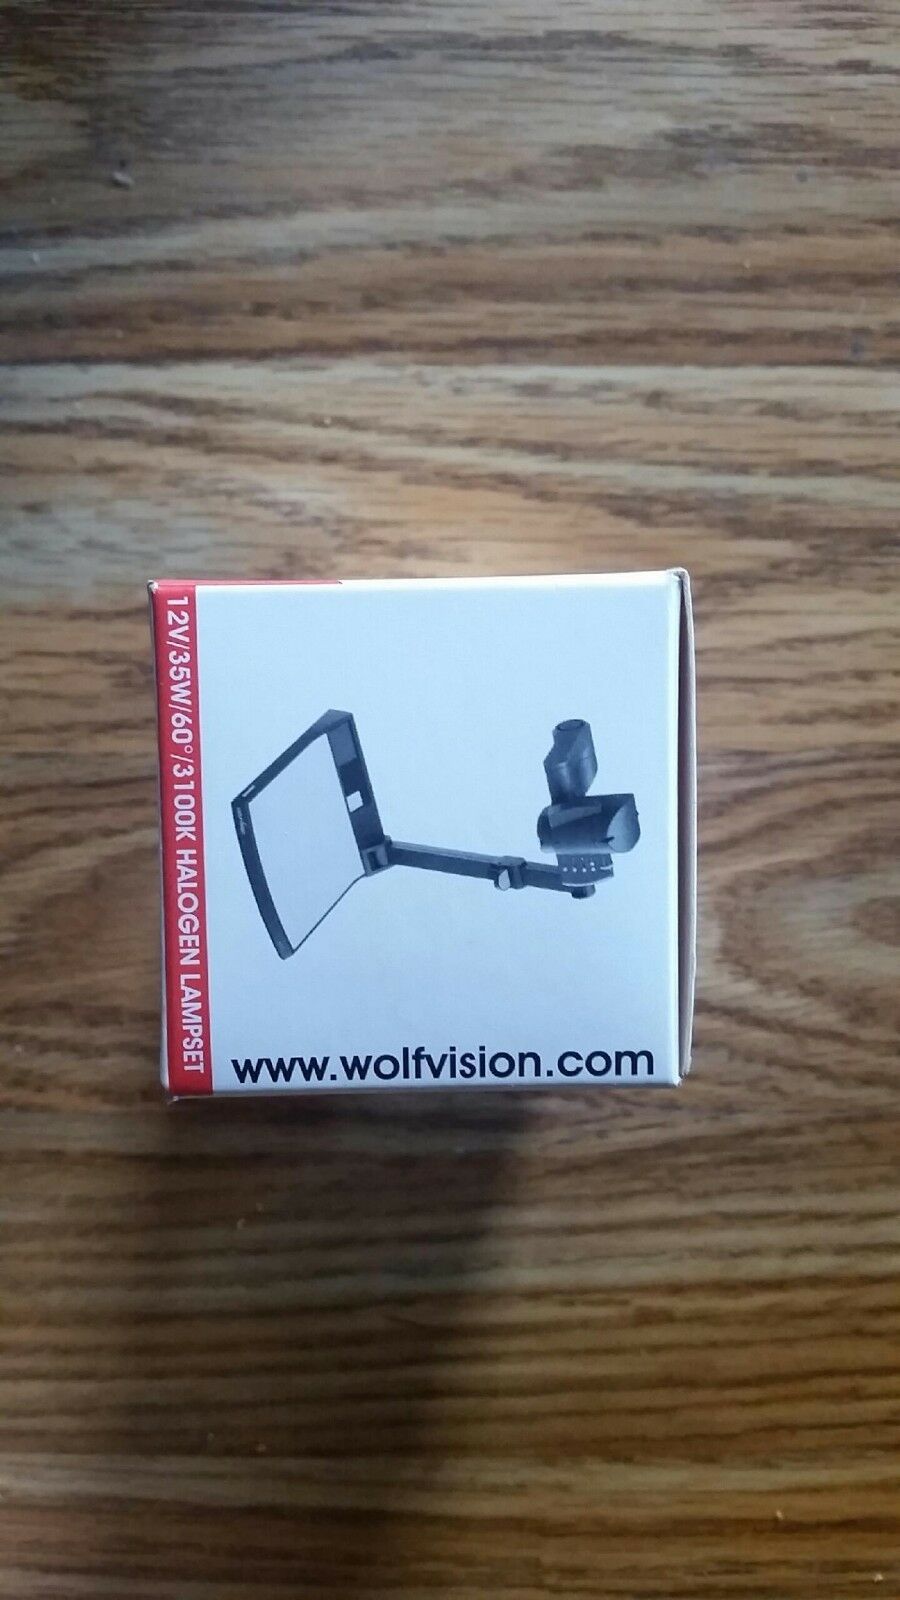 VZ-9Plus Details about   NEW Wolfvision Visualizer 12V/35W/60* Halogen 101038 Lampset for VZ-9 